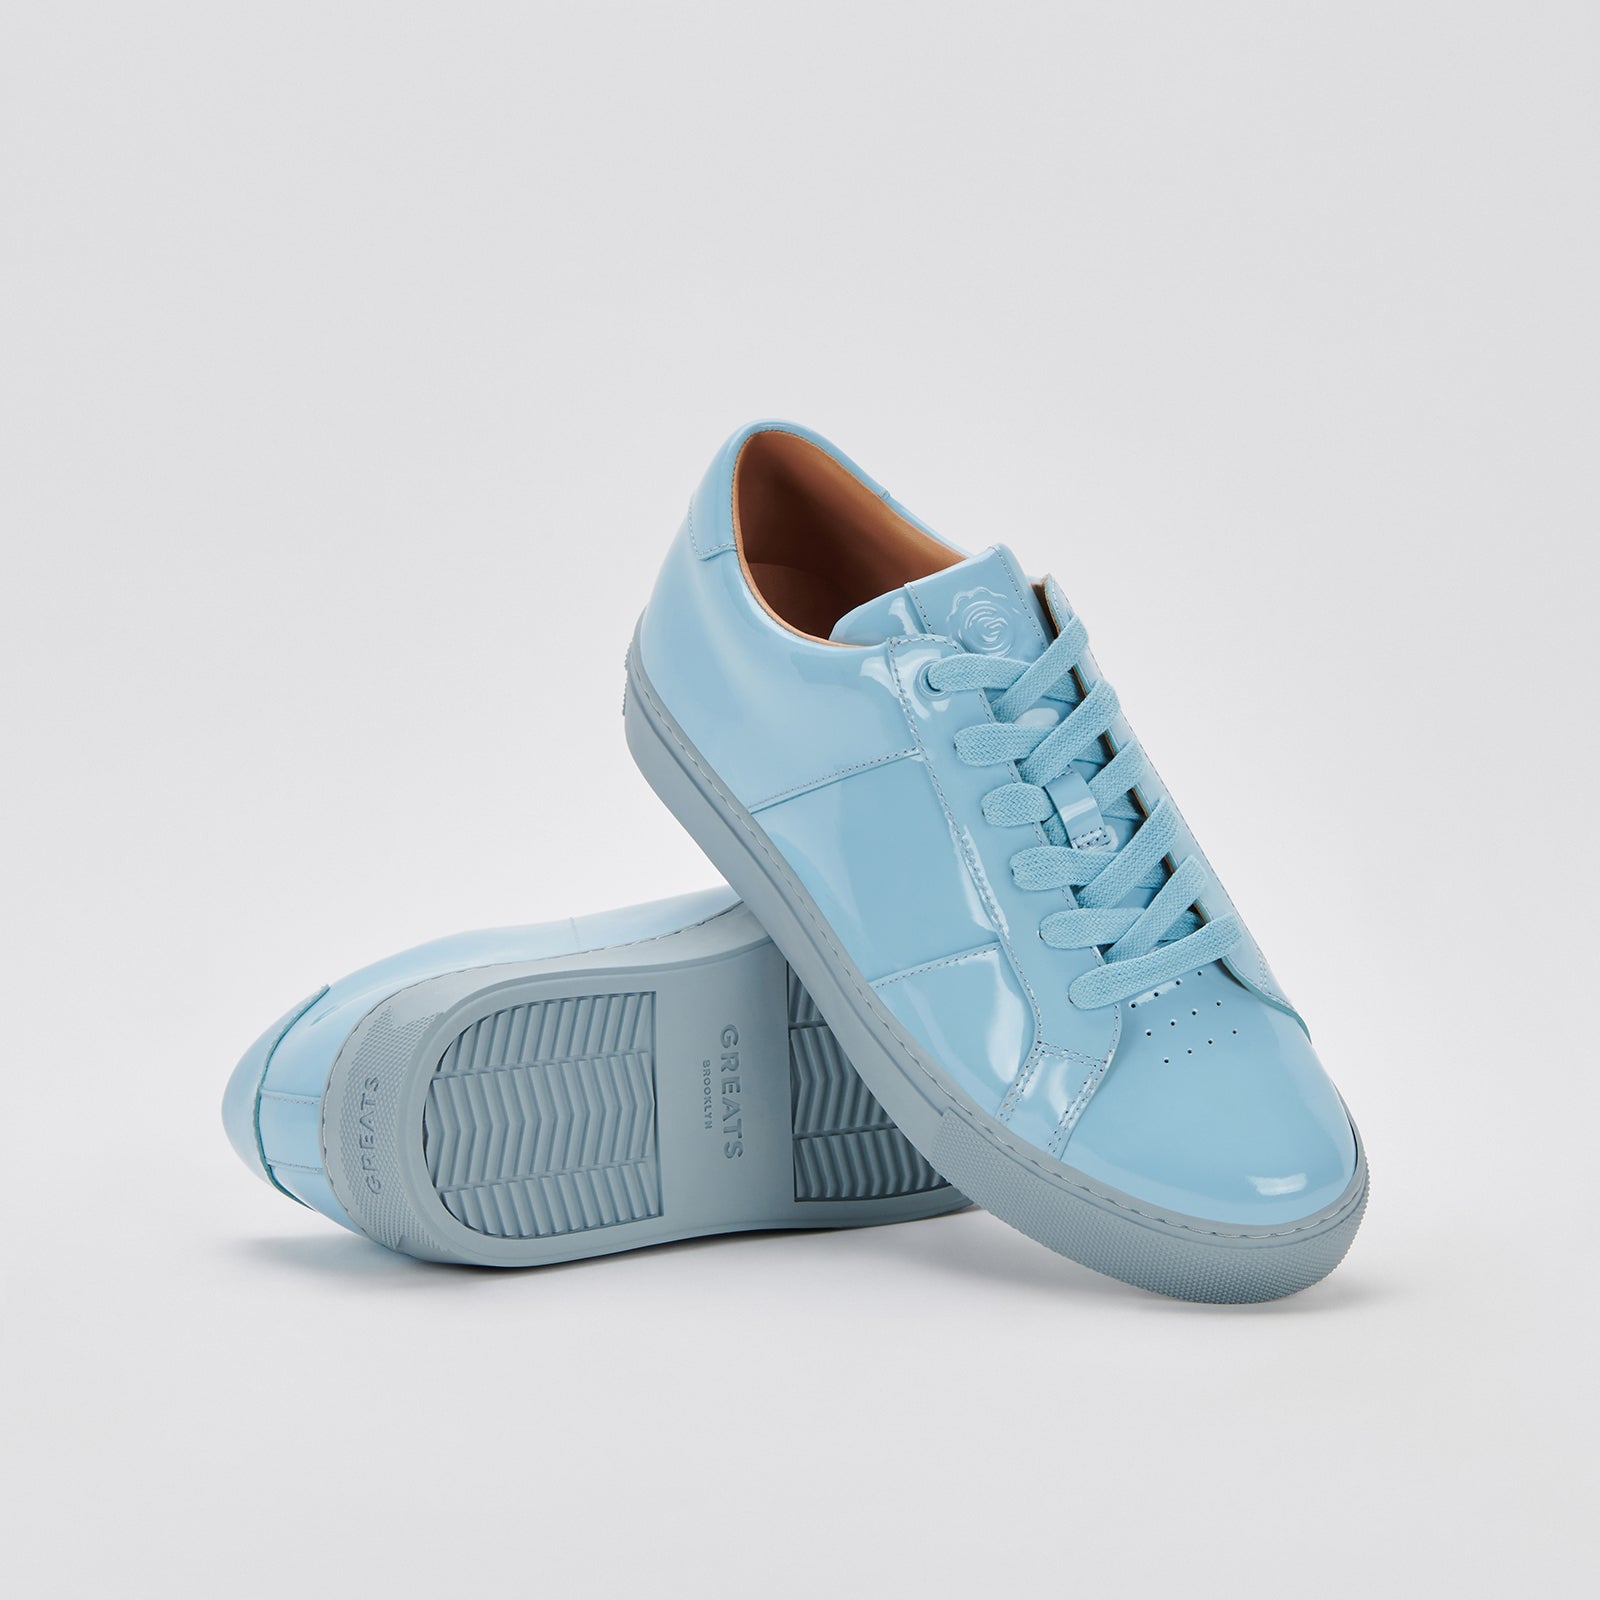 Greats - The Royale - Light Blue Patent - Women's Shoe – GREATS